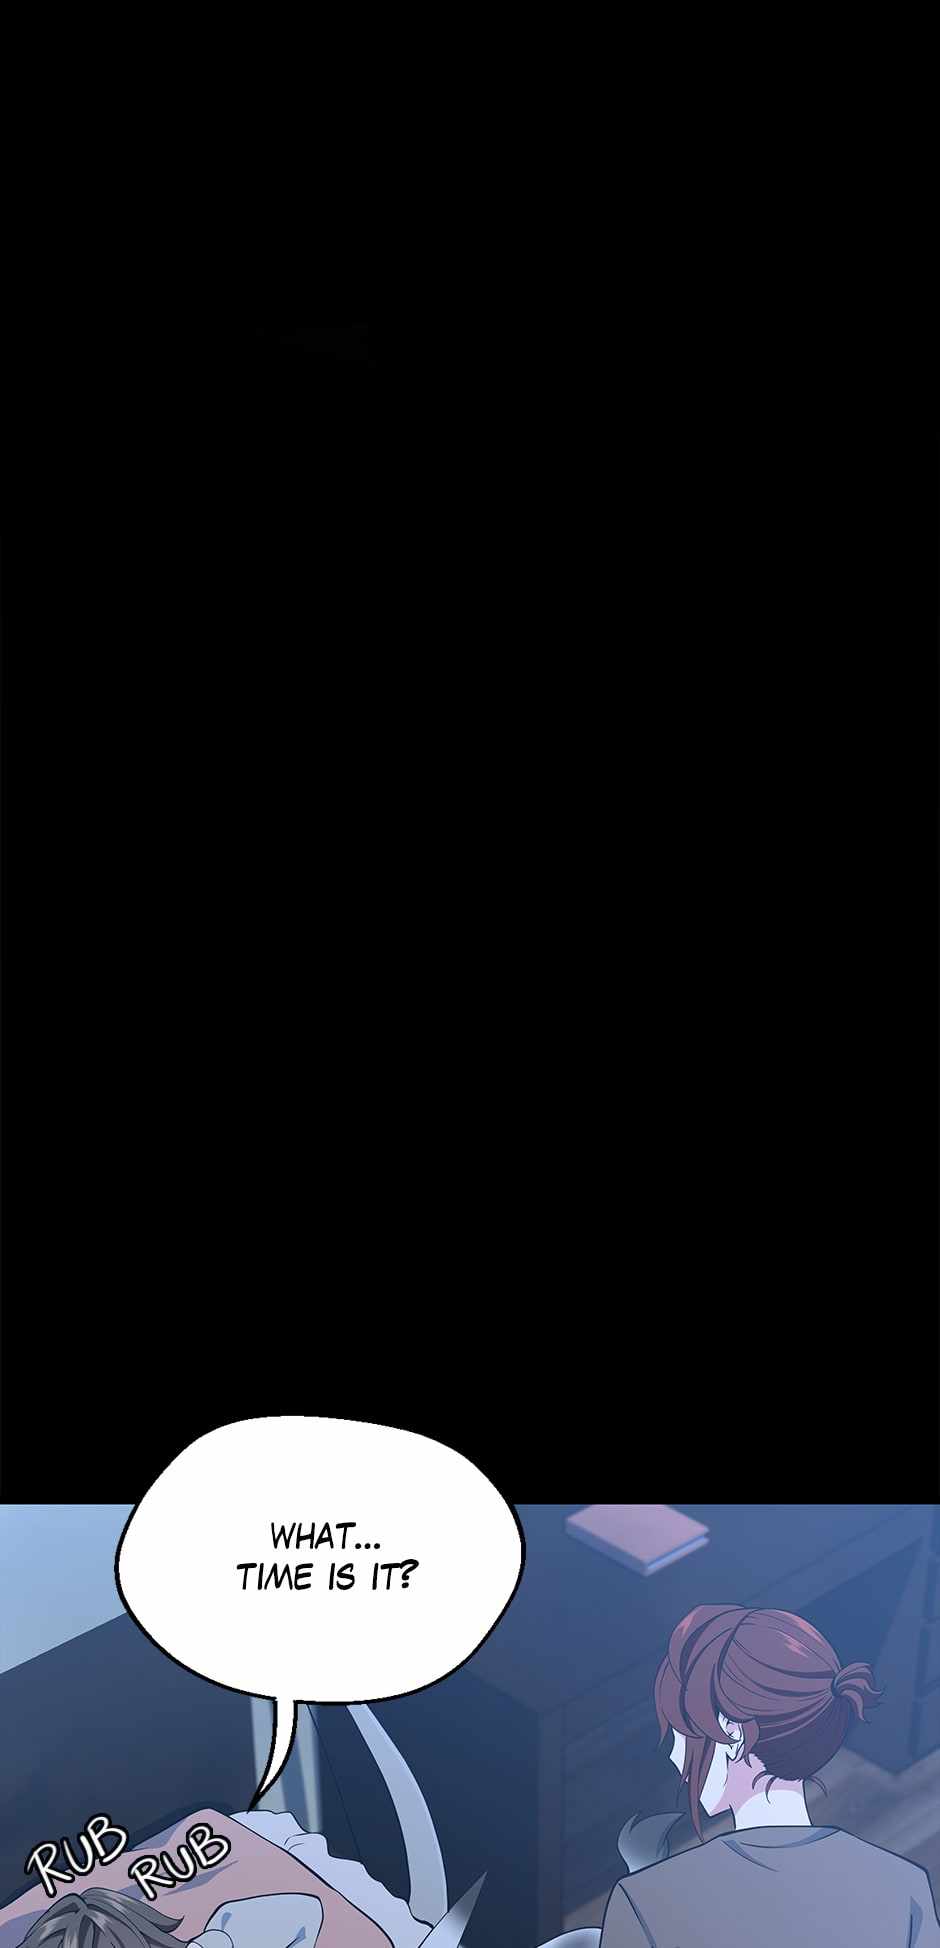 the beginning after the end manga ae, the beginning after the end manga all chapters, the beginning after the end manga and novel, the beginning after the end manga app, the beginning after the end manga anime planet, the beginning after the end manga author, the beginning after the end manga bahasa indonesia, the beginning after the end manga baka updates, the beginning after the end manga br, the beginning after the end manga baka, the beginning after the end manga batoto, the beginning after the end manga 27.bölüm, the beginning after the end manga, the beginning after the end manga chapter 70, the beginning after the end manga chapter 81, the beginning after the end manga chapter 71, the beginning after the end manga chapter 74, the beginning after the end manga chapter 77, the beginning after the end manga chapter 76, the beginning after the end manga chapter 73, the beginning after the end manga chapter 78, the beginning after the end manga gecesi, the beginning after the end golden manga, the beginning after the end g manga, the beginning after the end manga host, the beginning after the end holy manga, he beginning after the end manga, the beginning after the end manga in english, the beginning after the end manga isekaiscan, the beginning after the end manga ingles, manga the beginning after the end information, the beginning after the end manga scan ita, baca manga the beginning after the end bahasa indonesia, the beginning after the end manga japanese name, the beginning after the end manga kaka, the beginning after the end manga komi, the beginning after the end manga kiryuu